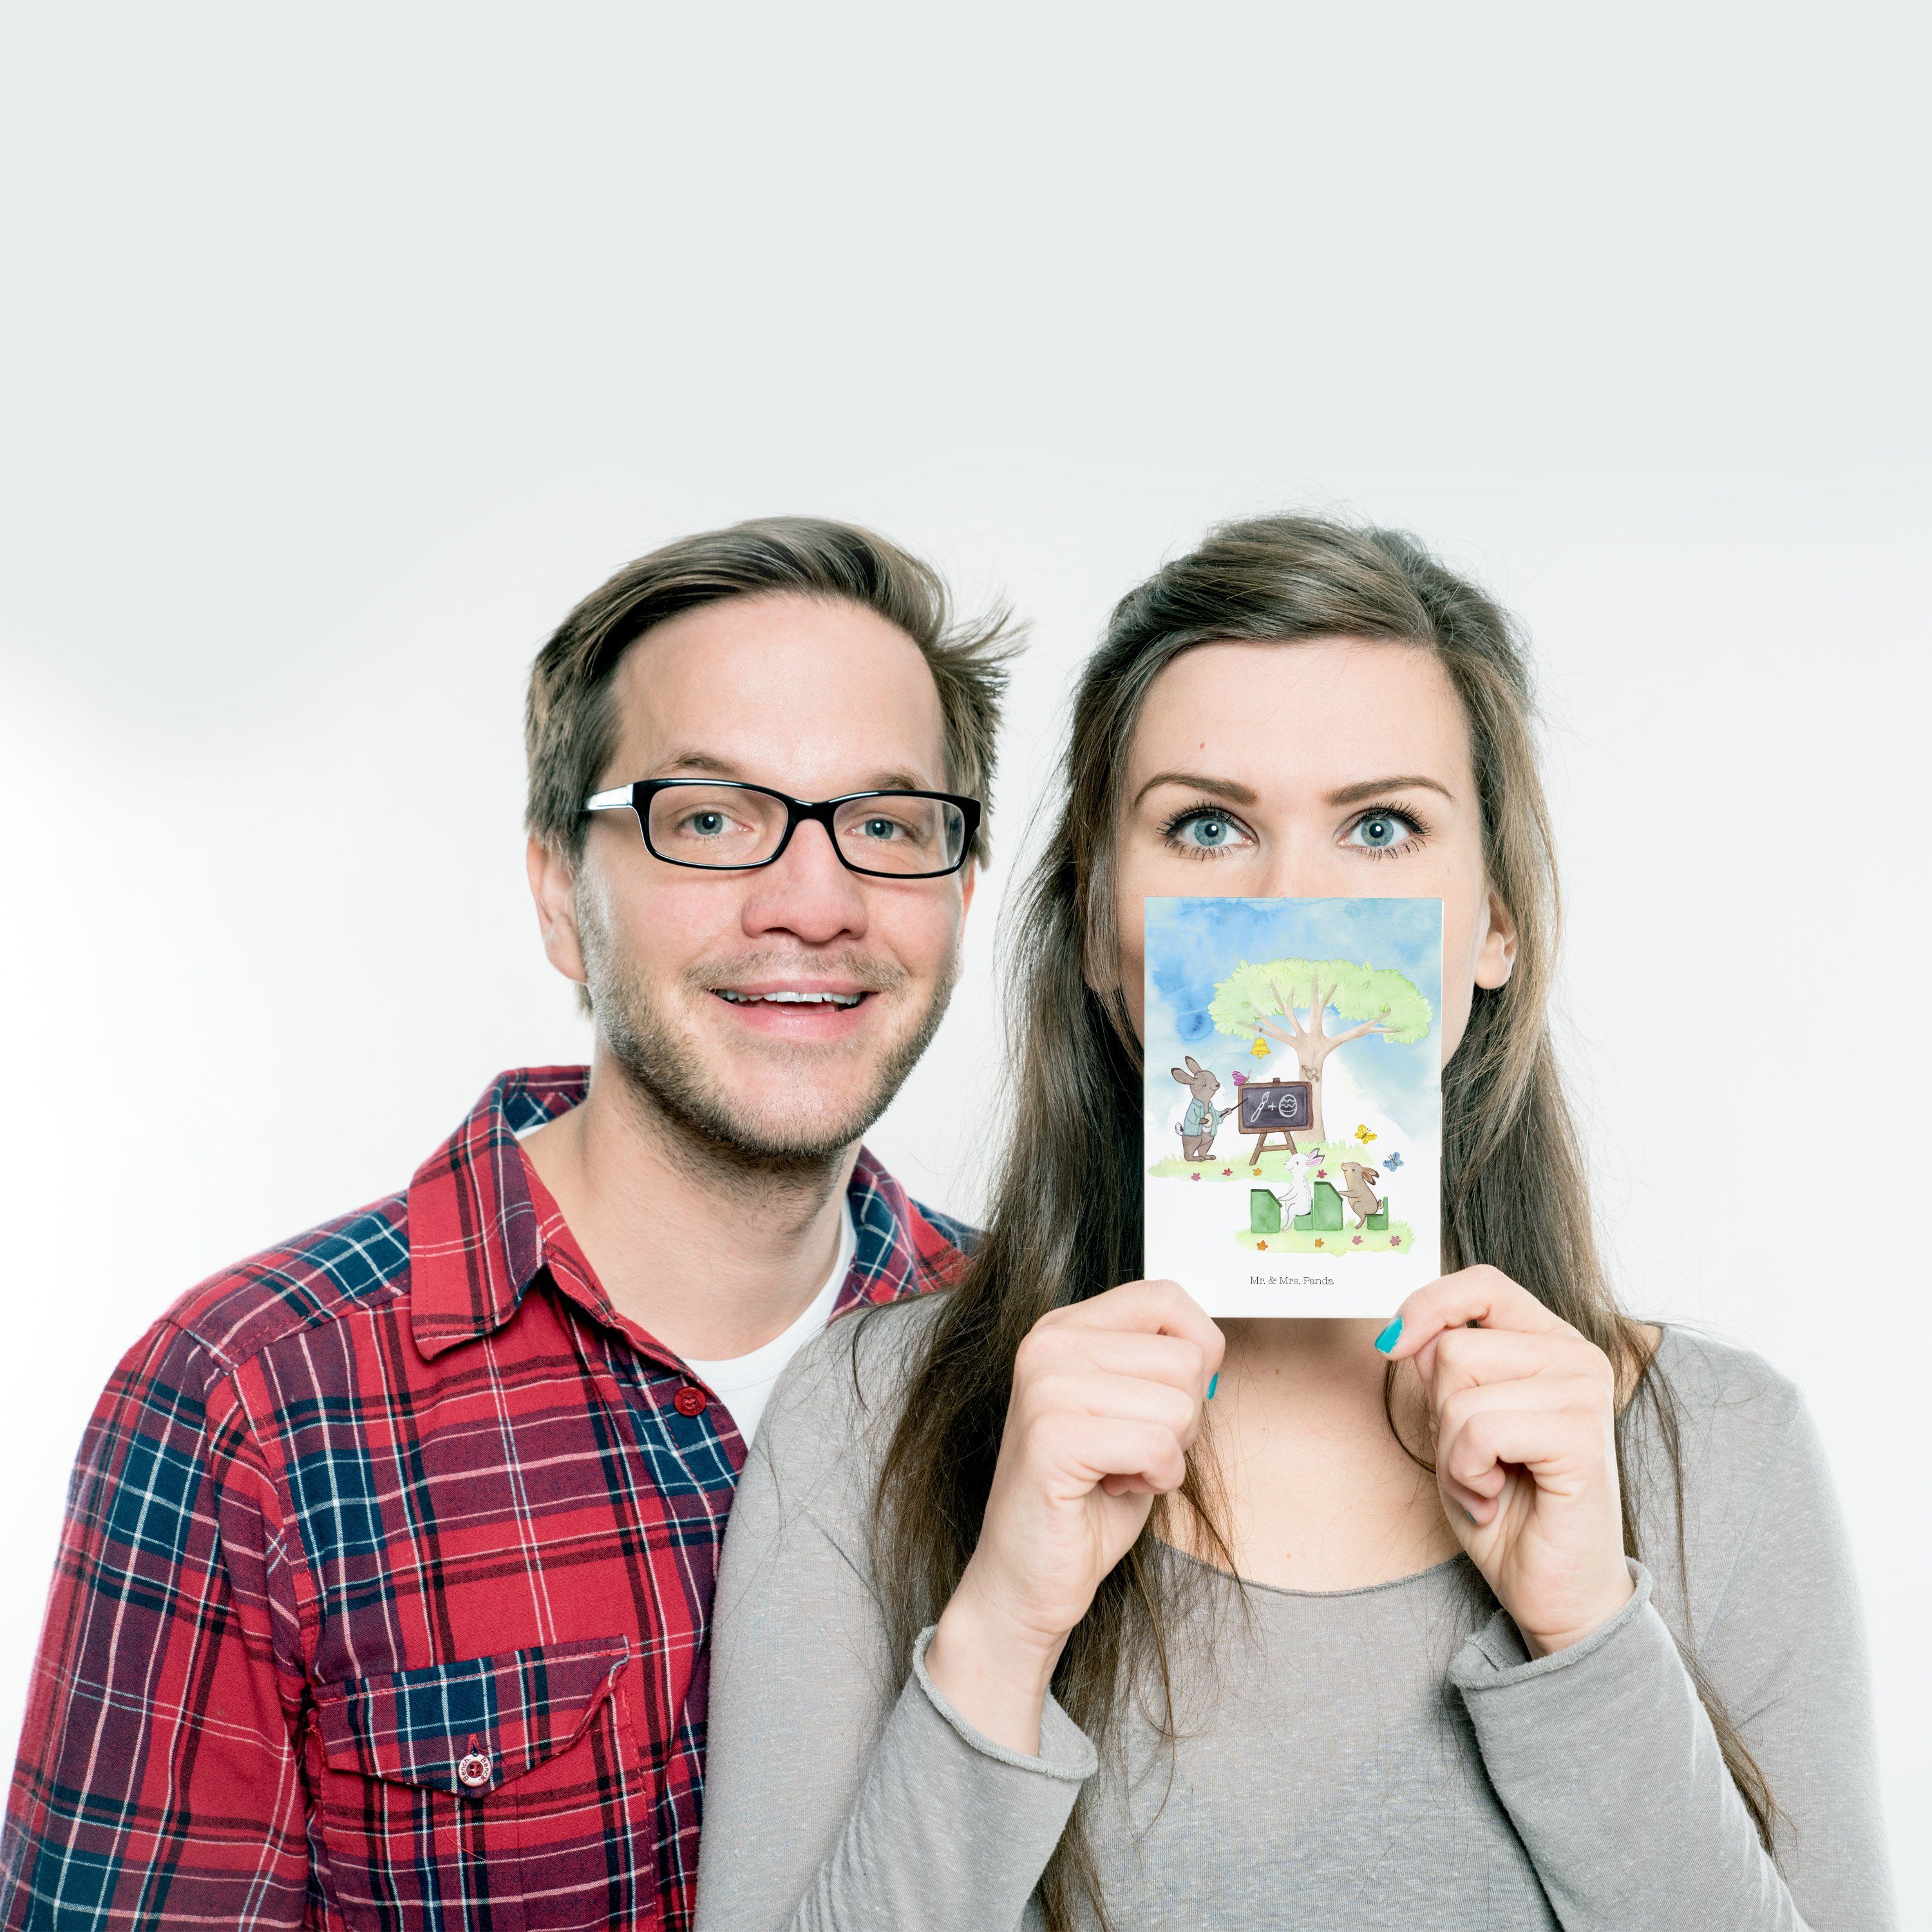 Mr. & Mrs. Panda Geschenk, Geschenk - - Weiß zu Ostern, Dan Hasenschule Postkarte Ansichtskarte